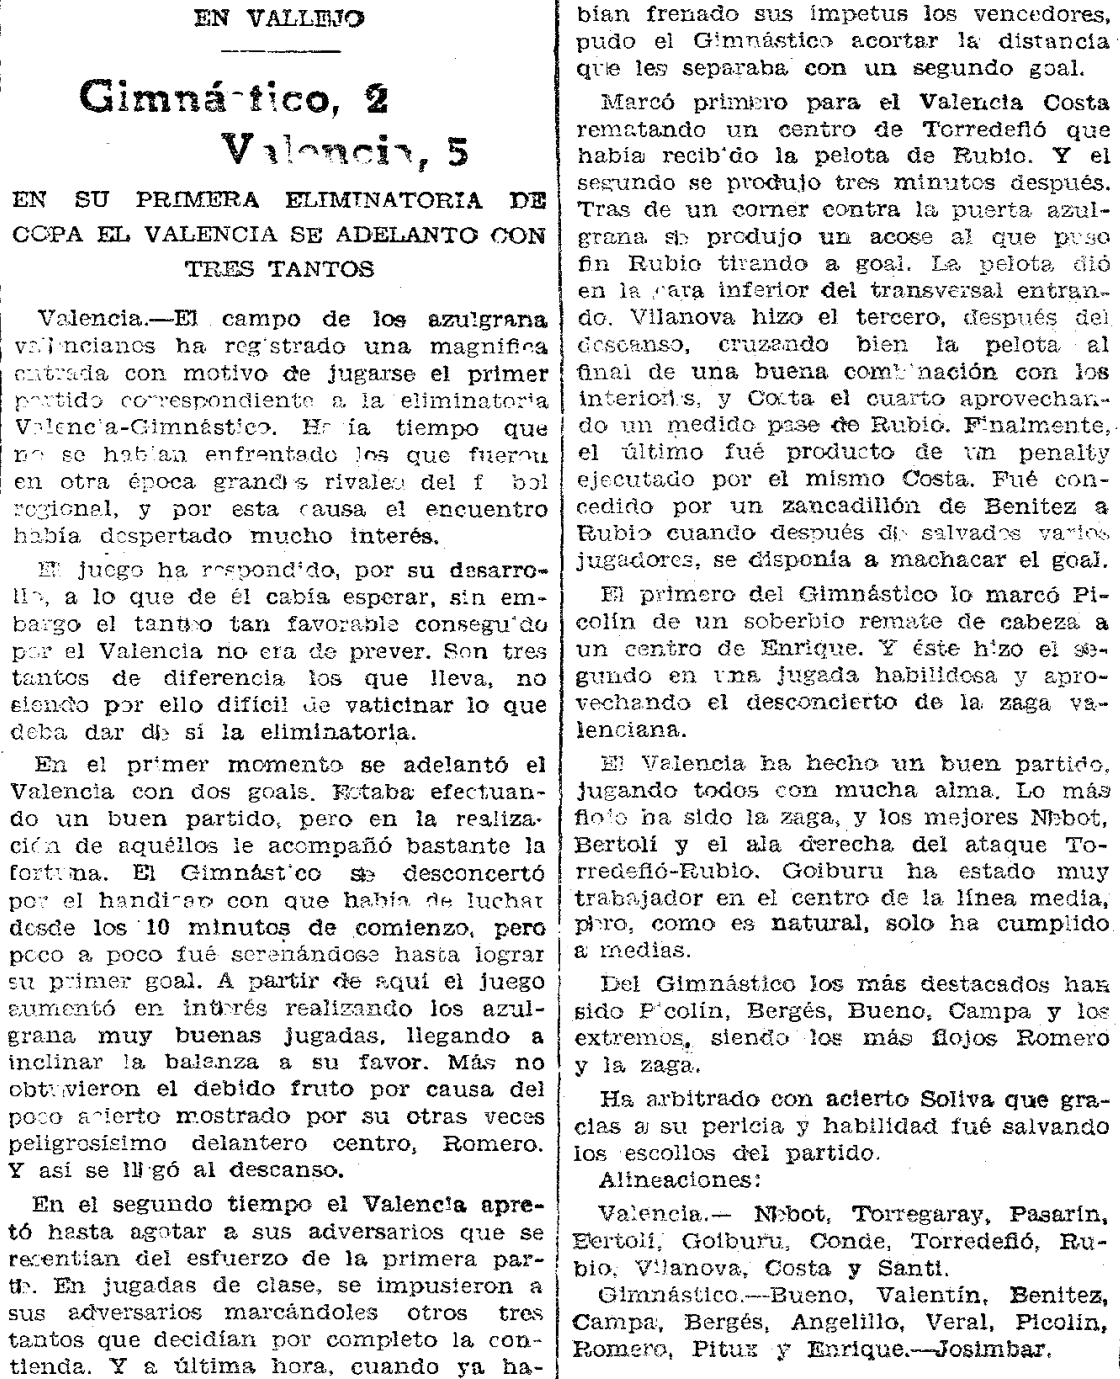 1935.05.01 (1 мая 1935), Гимнастико - Валенсия, 2-5.png